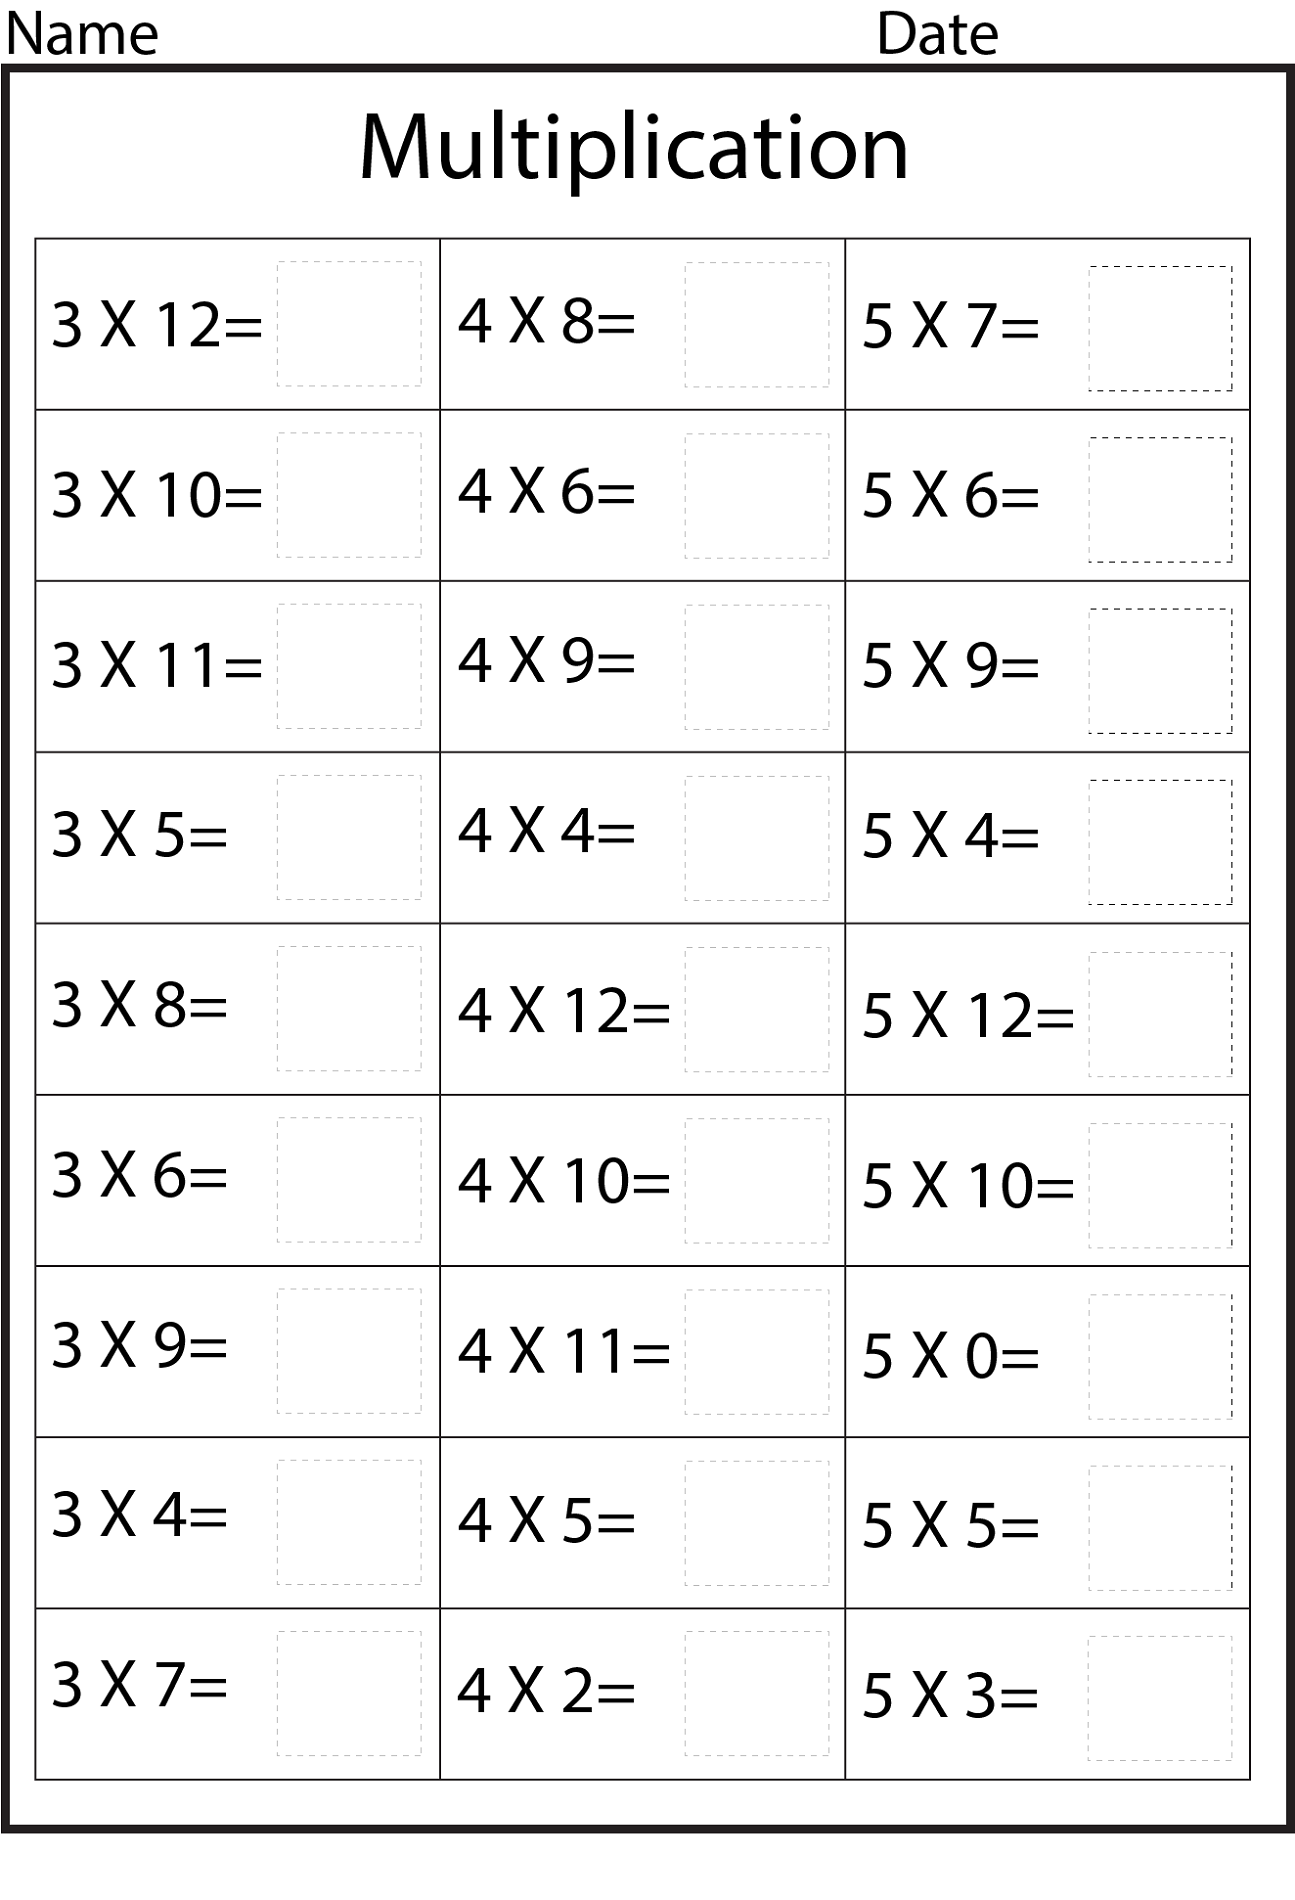 3-times-table-worksheets-activity-shelter-multiplication-worksheets